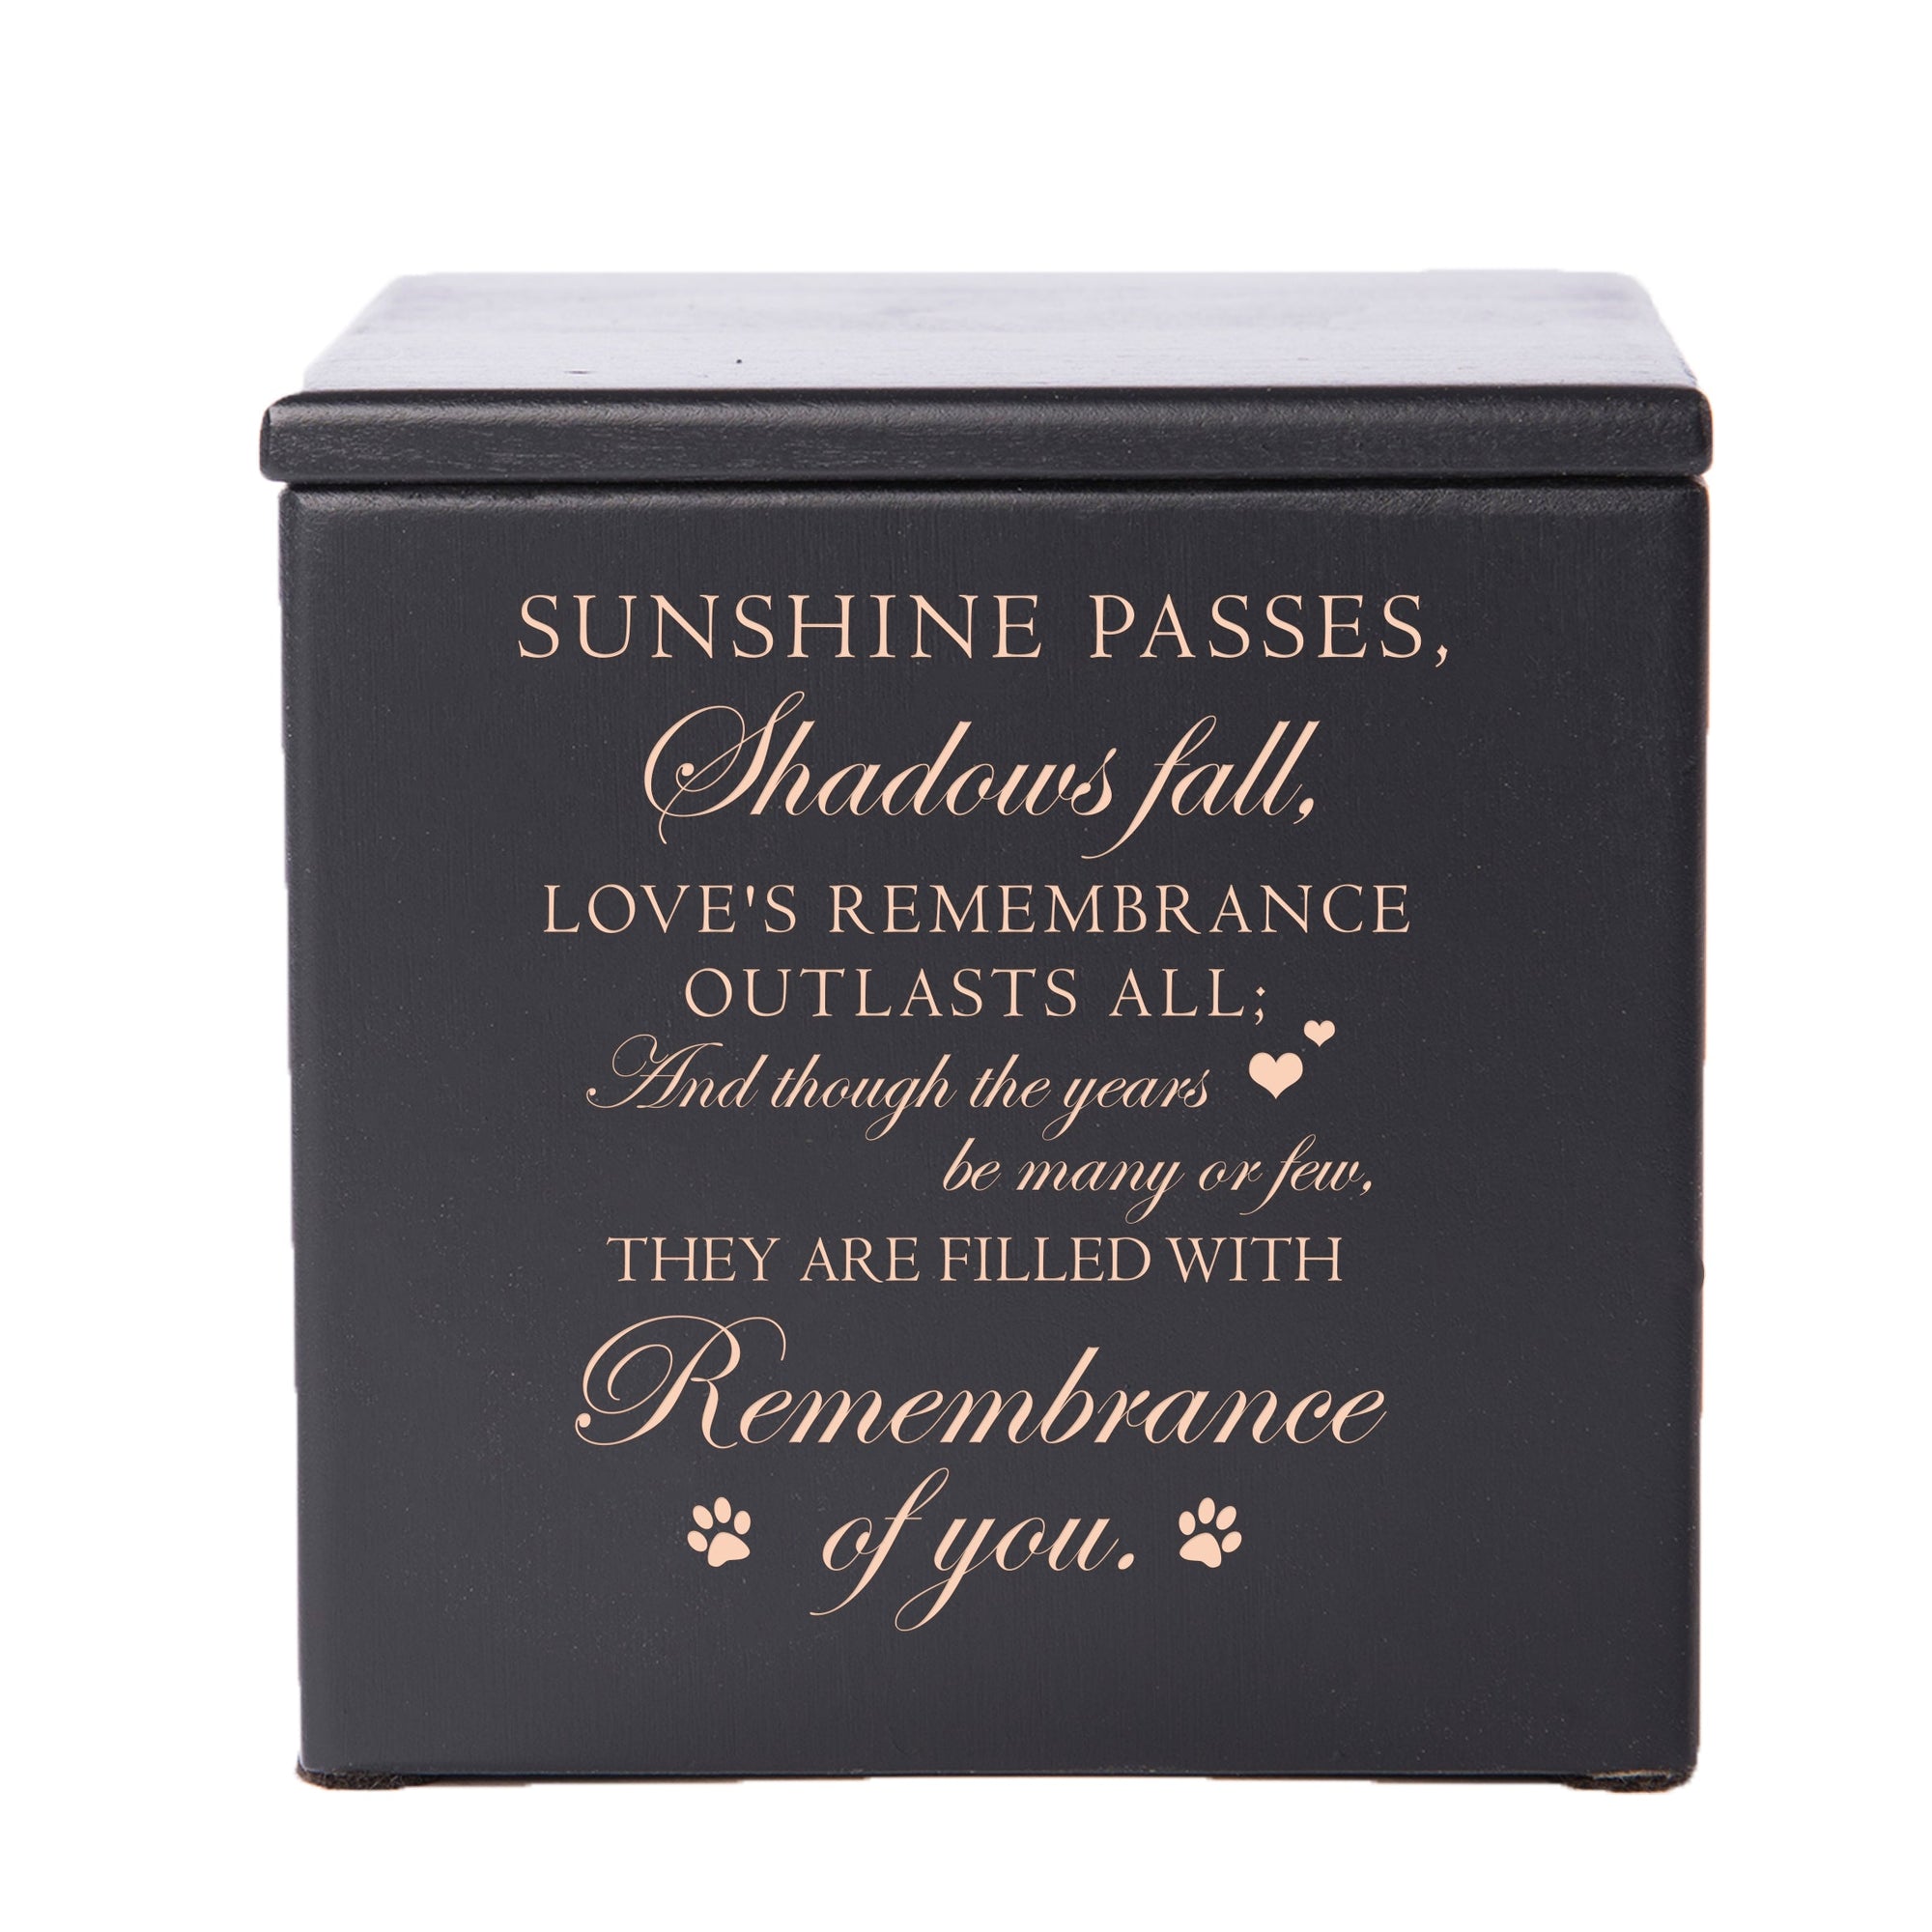 Pet Memorial Keepsake Cremation Urn Box for Dog or Cat - Sunshine Passes, Shadows Fall